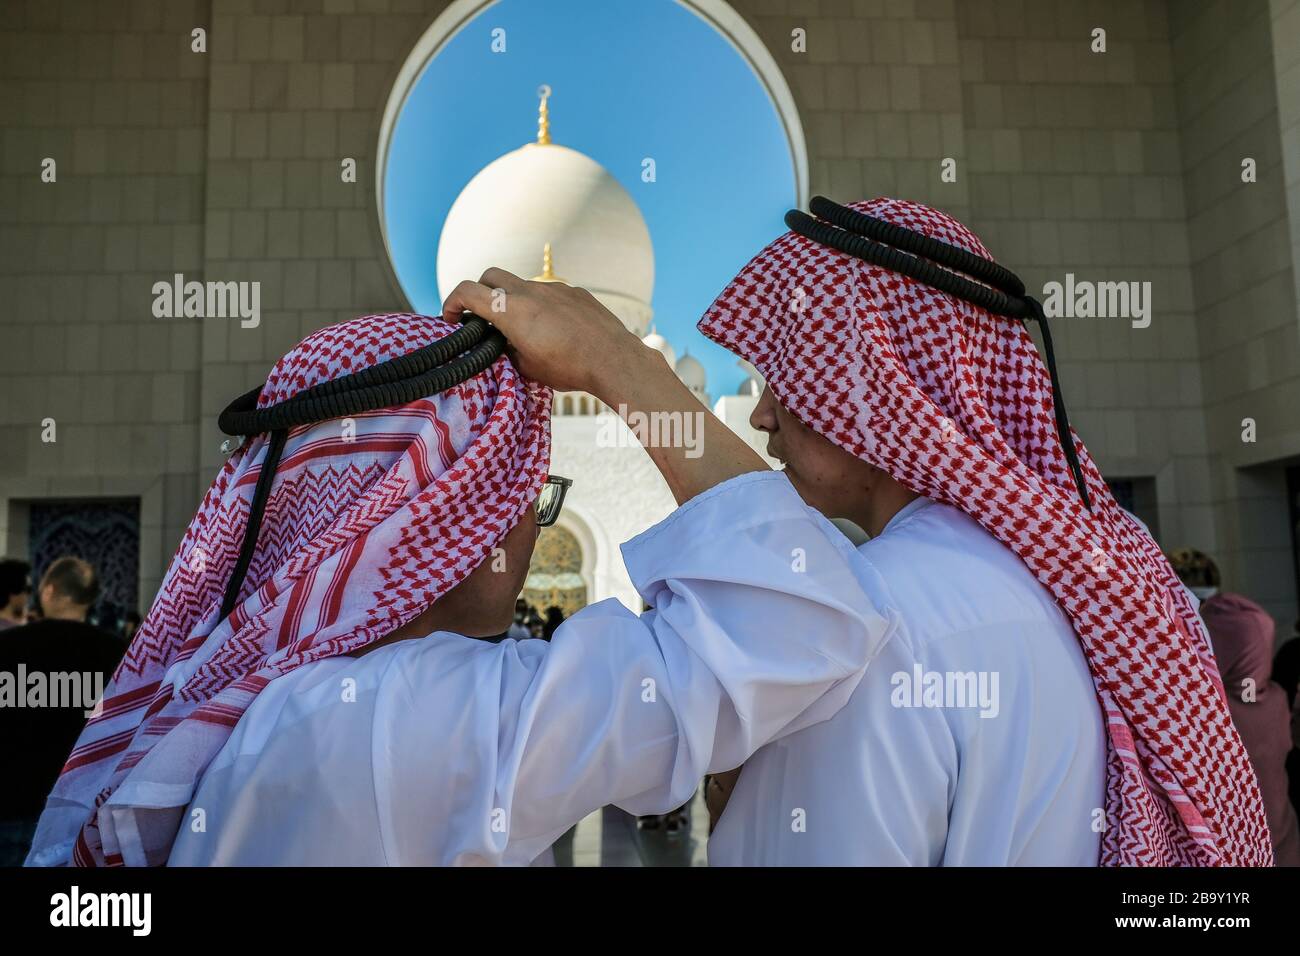 Emiratos Árabes Unidos. Abu Dhabi. Gran Mezquita Sheikh Zayed Foto de stock